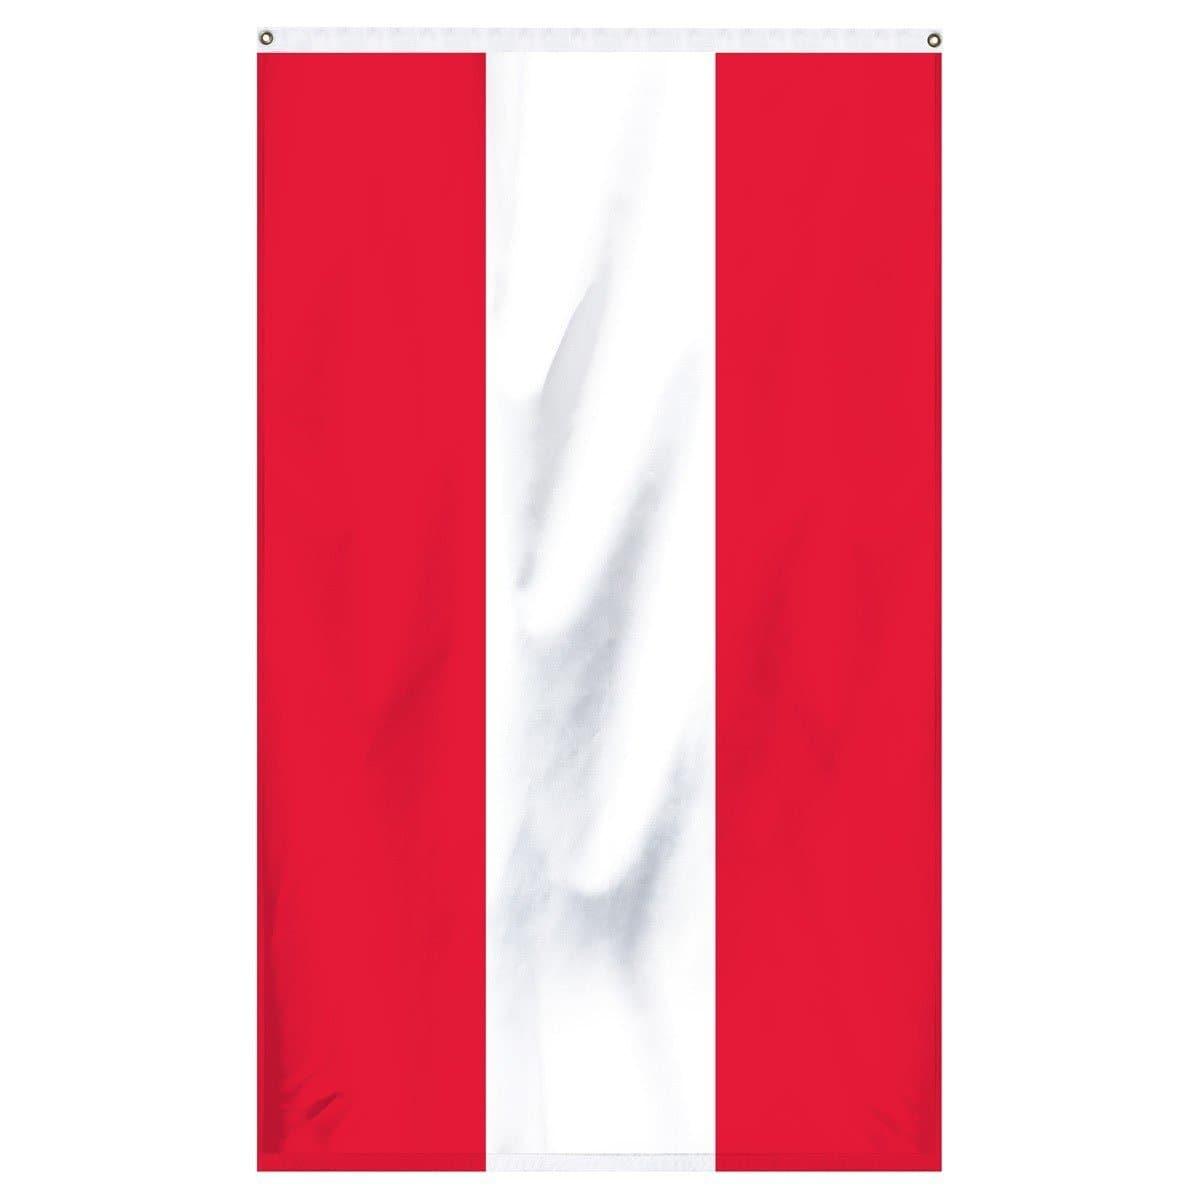 Austria International flag for sale for a flagpole